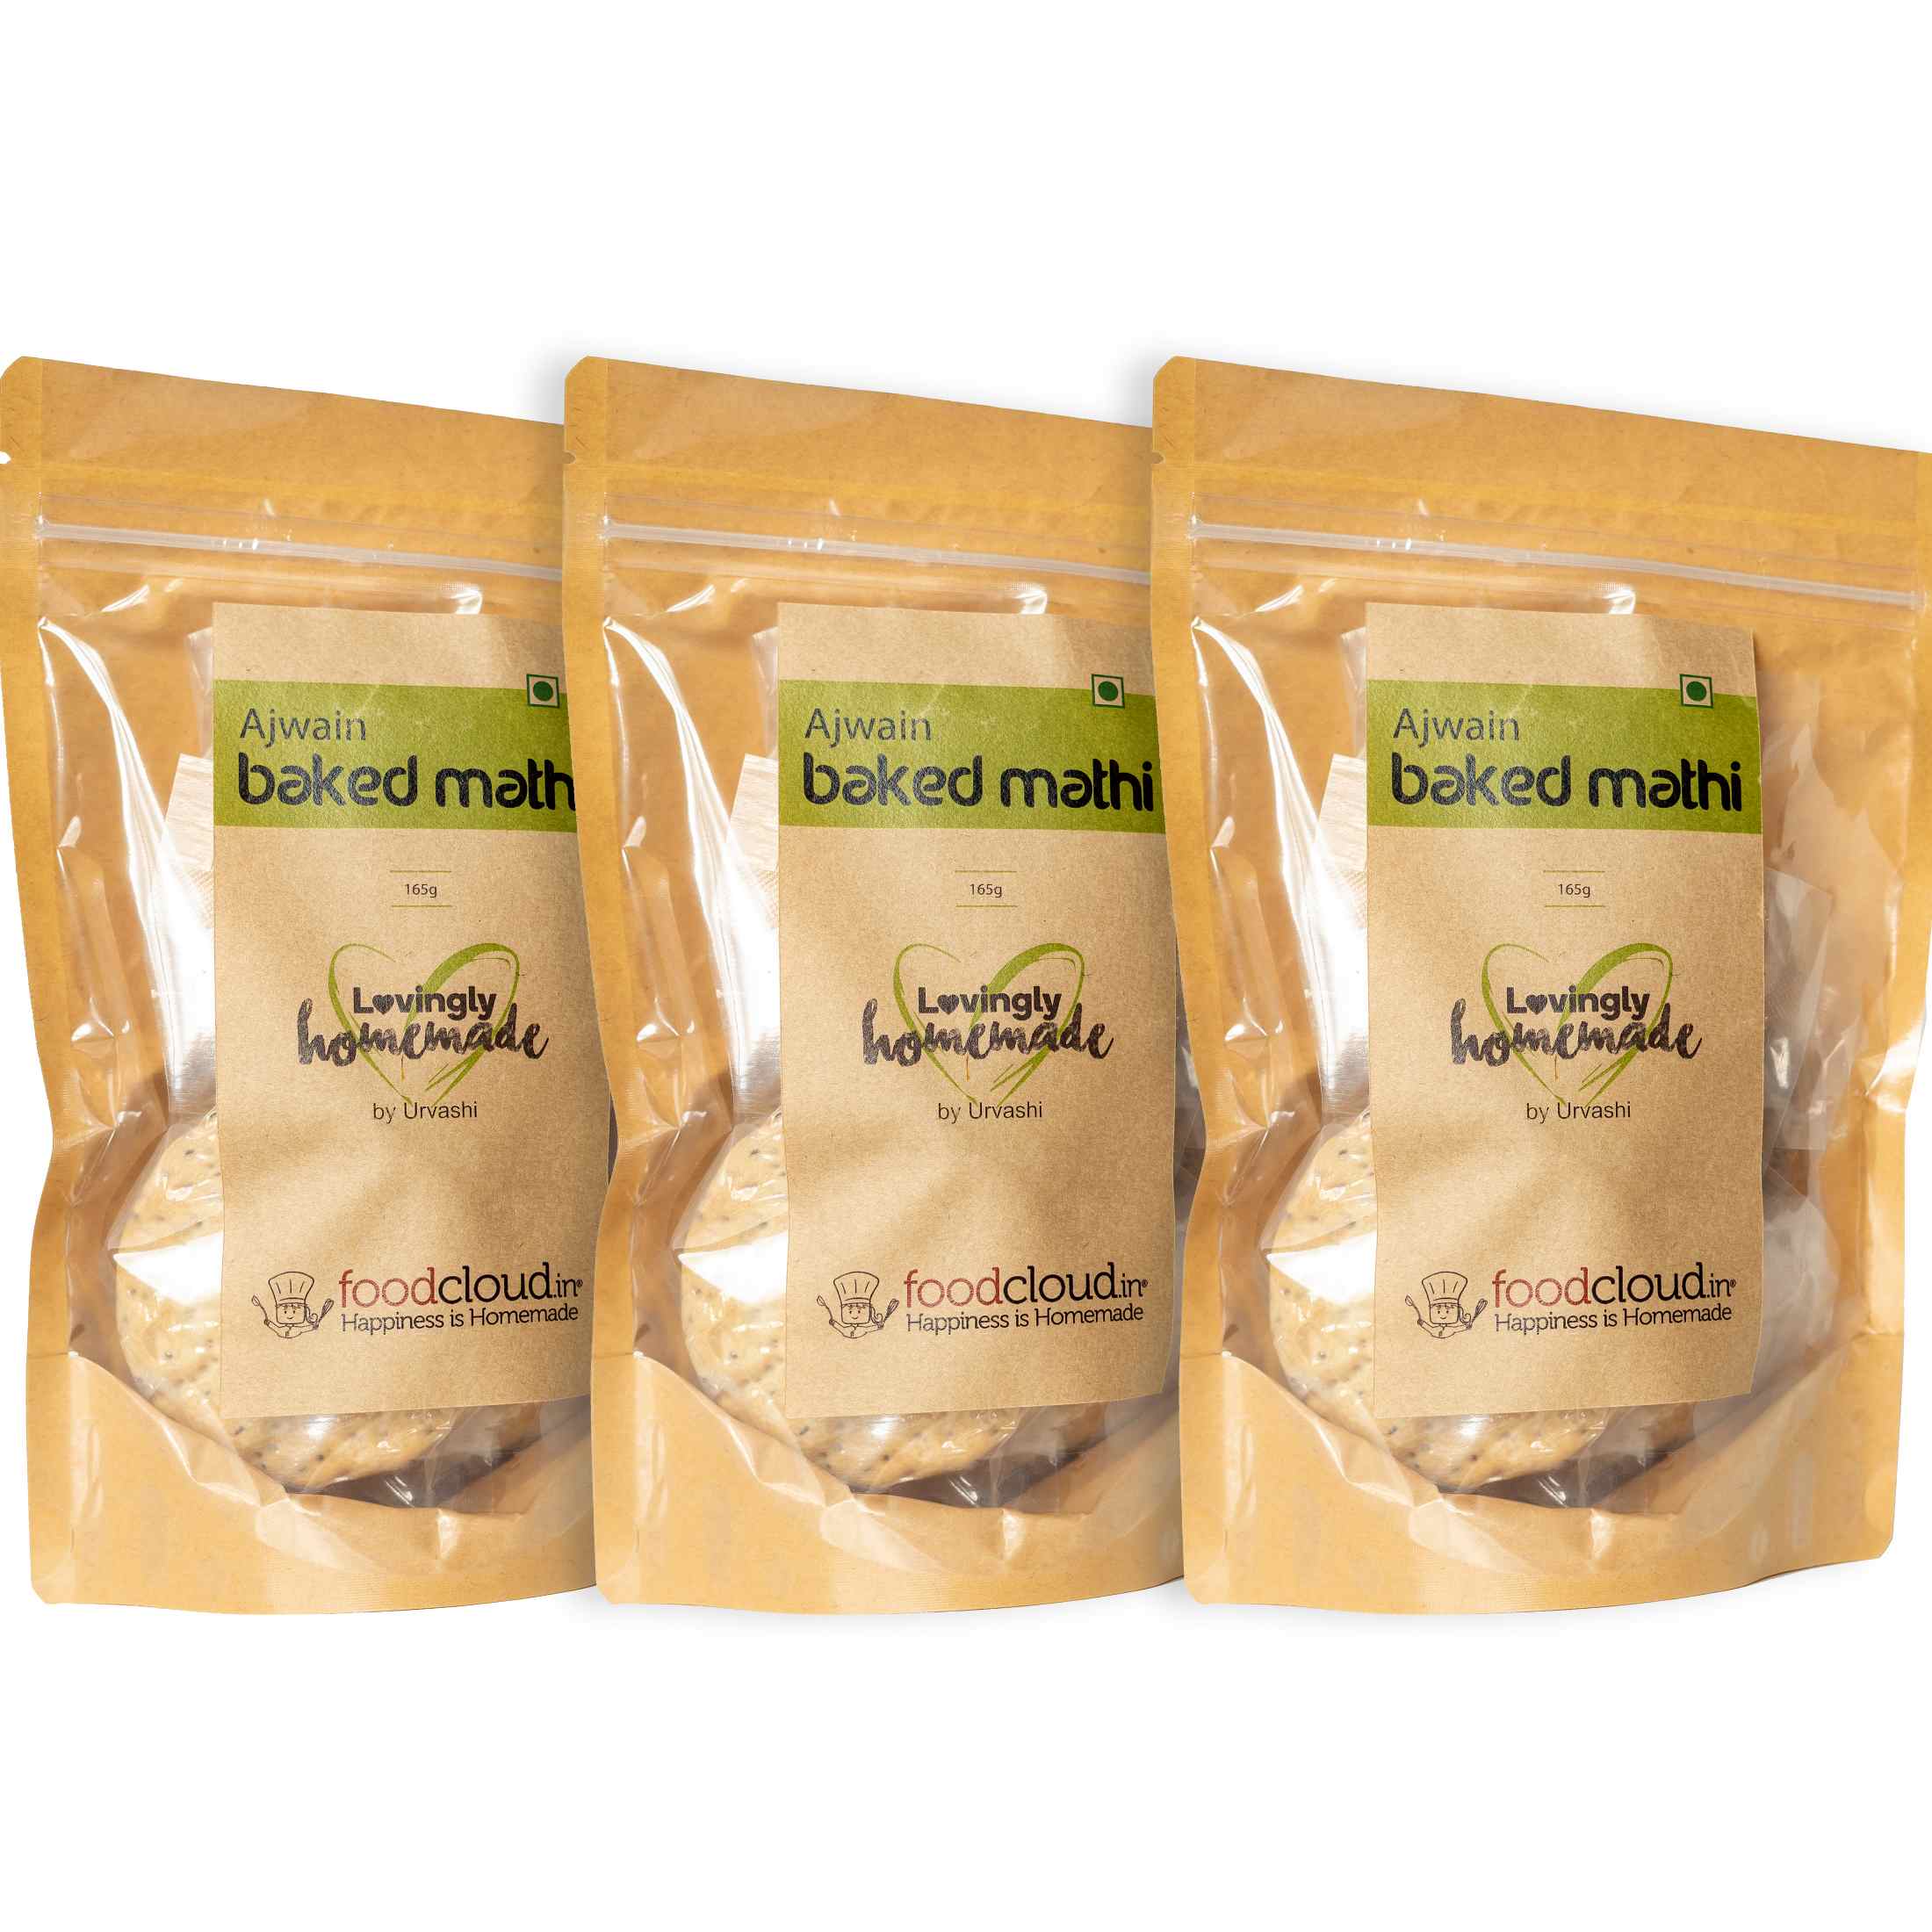 Product: FoodCloud Baked Ajwain Mathi (Pack of 3)